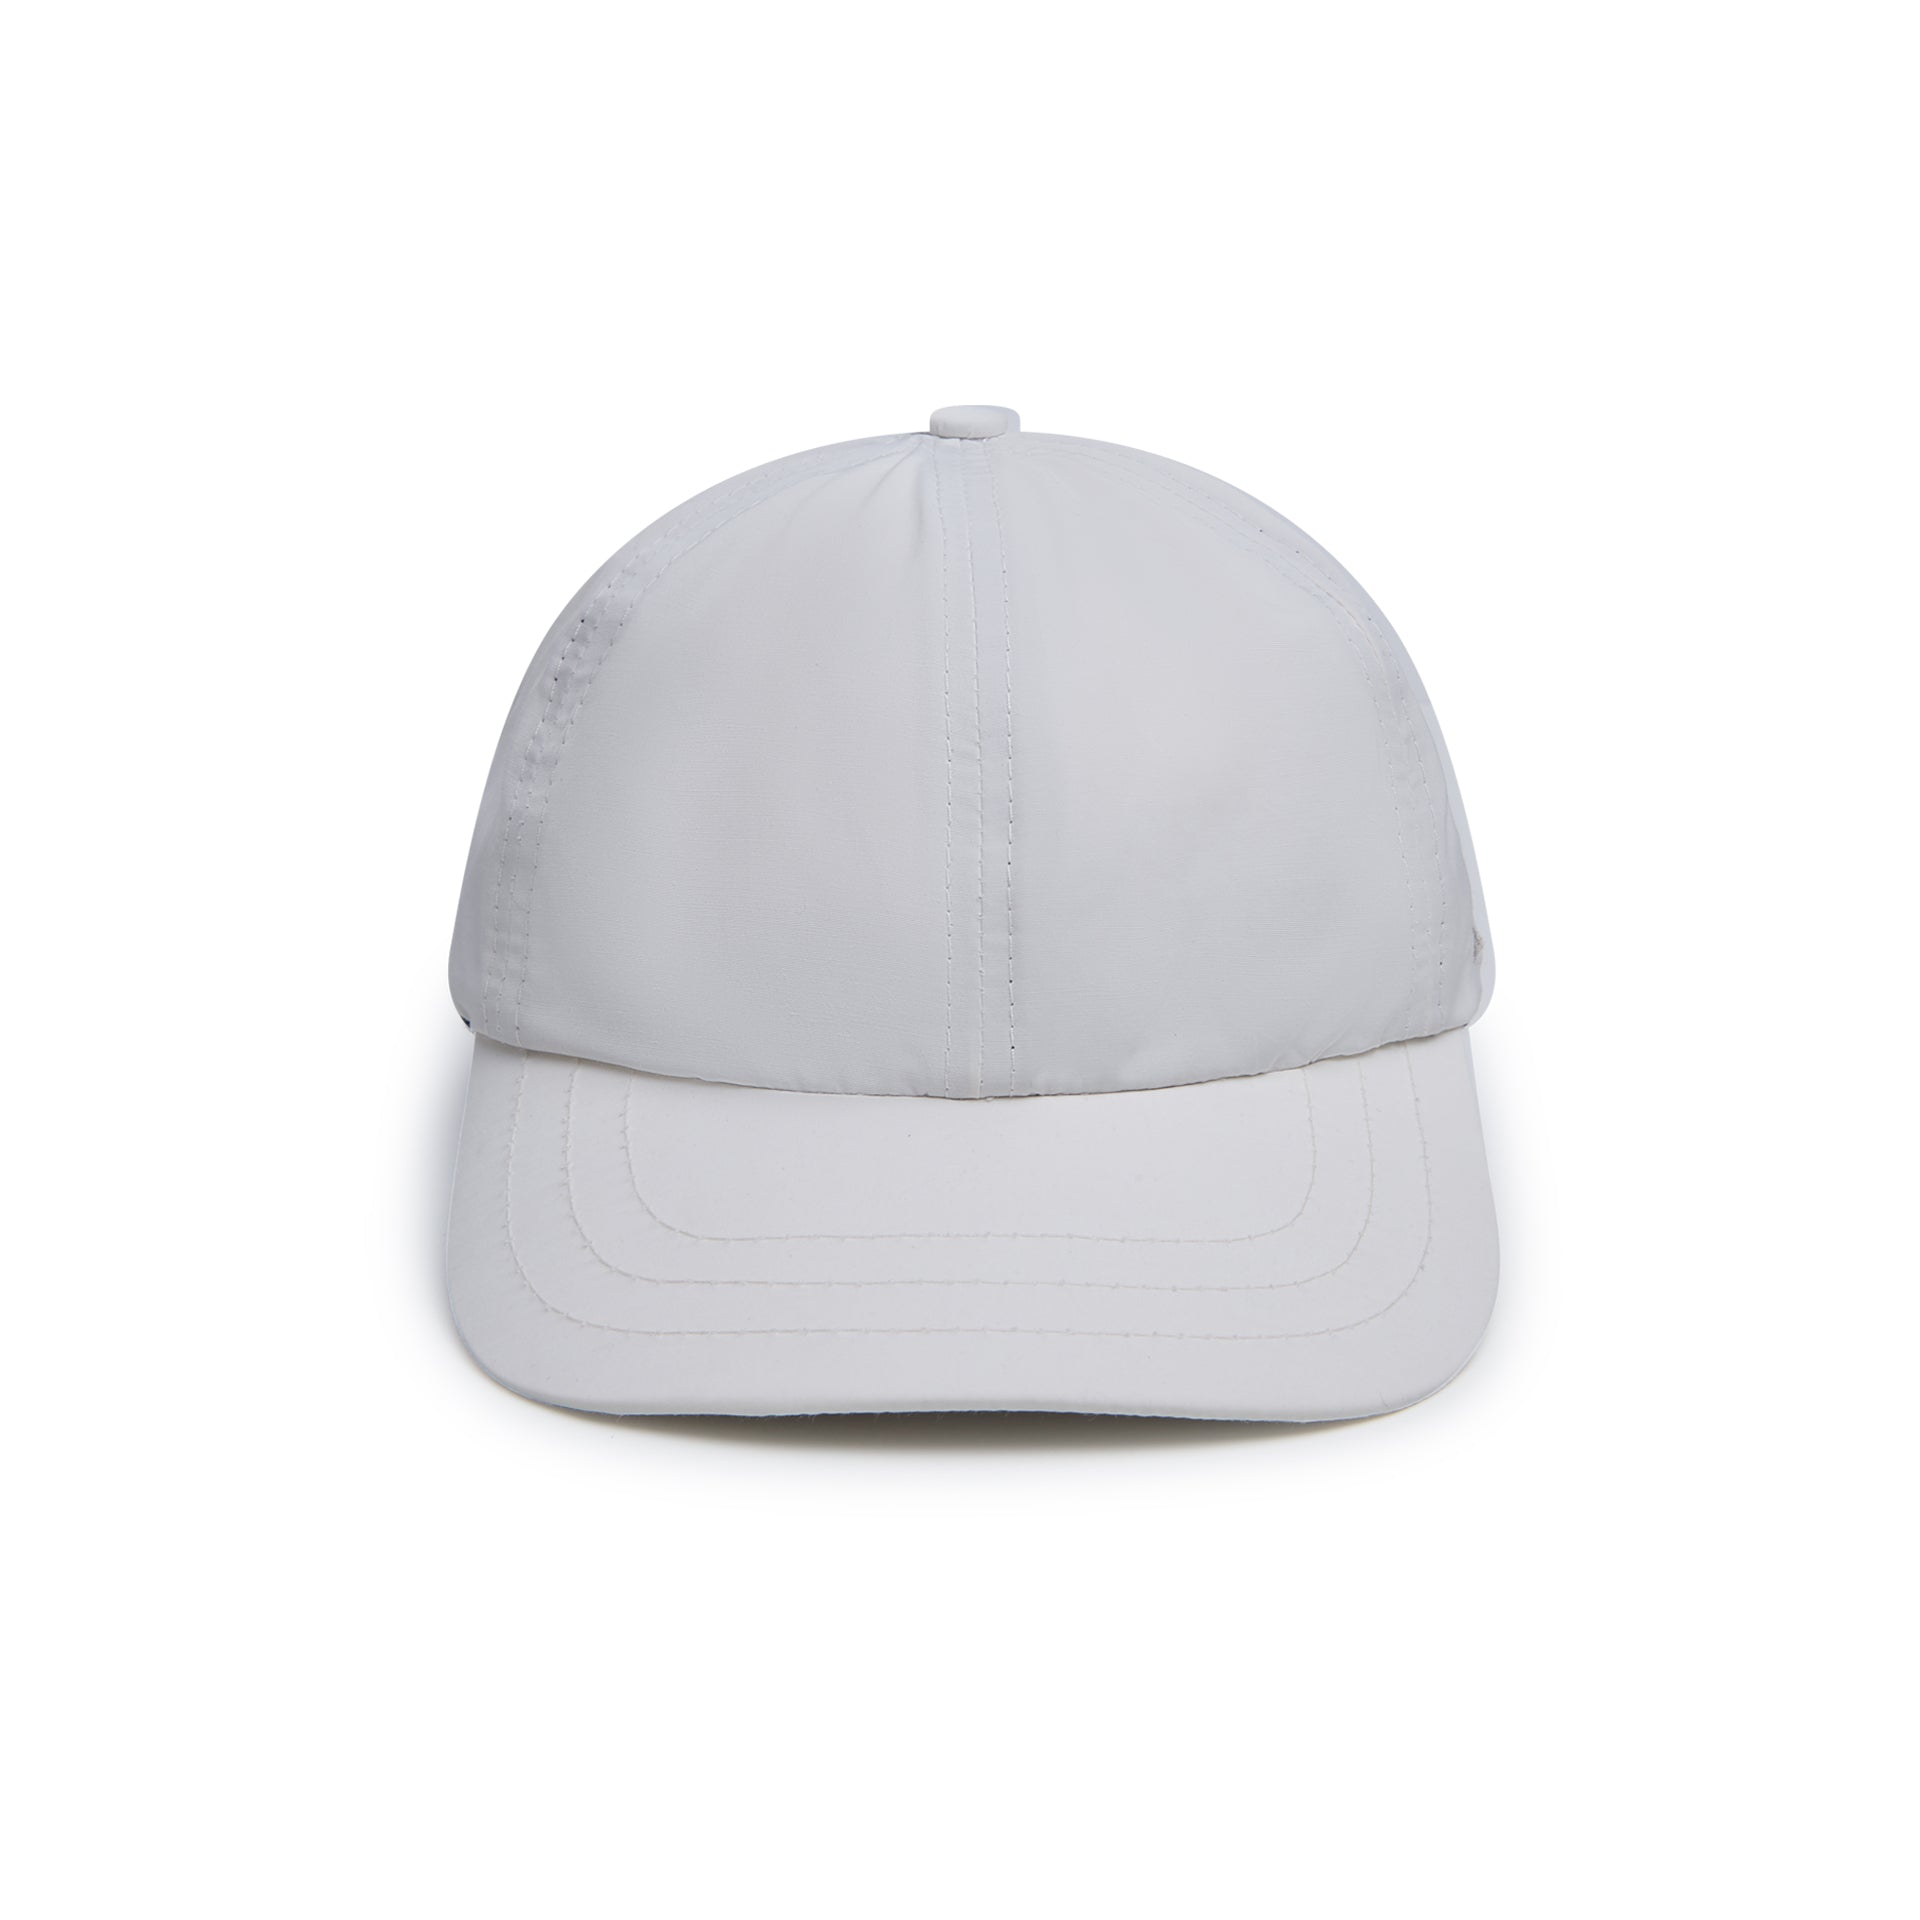 CLASS - Sport Hat "Class Inverso" Off White